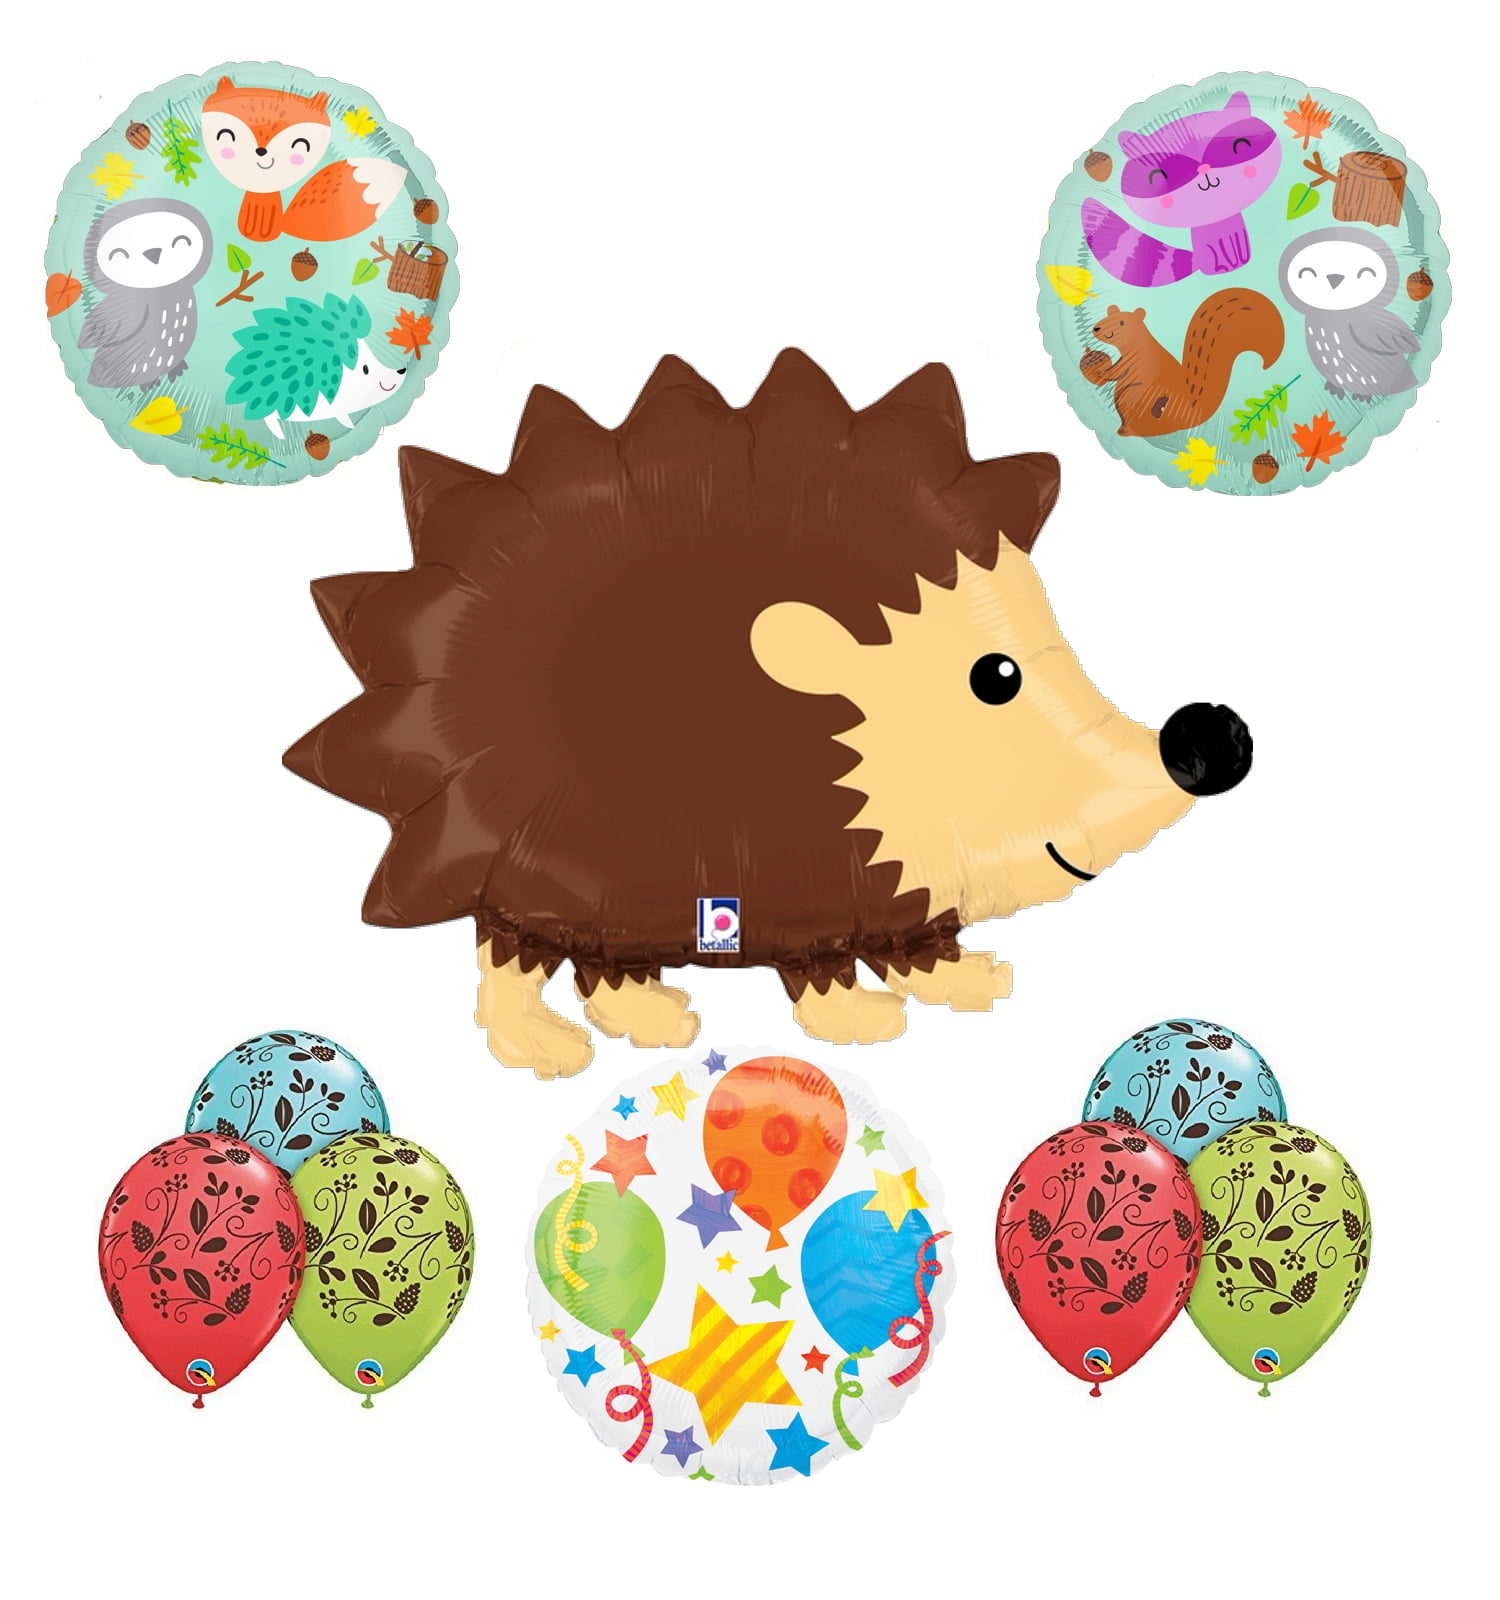 Happy Mail Critter Laptop Decal Creature Love Water Bottle Art Cute Animal Pet Adhesive Hedgehog Vinyl Sticker Valentine's Day Gift